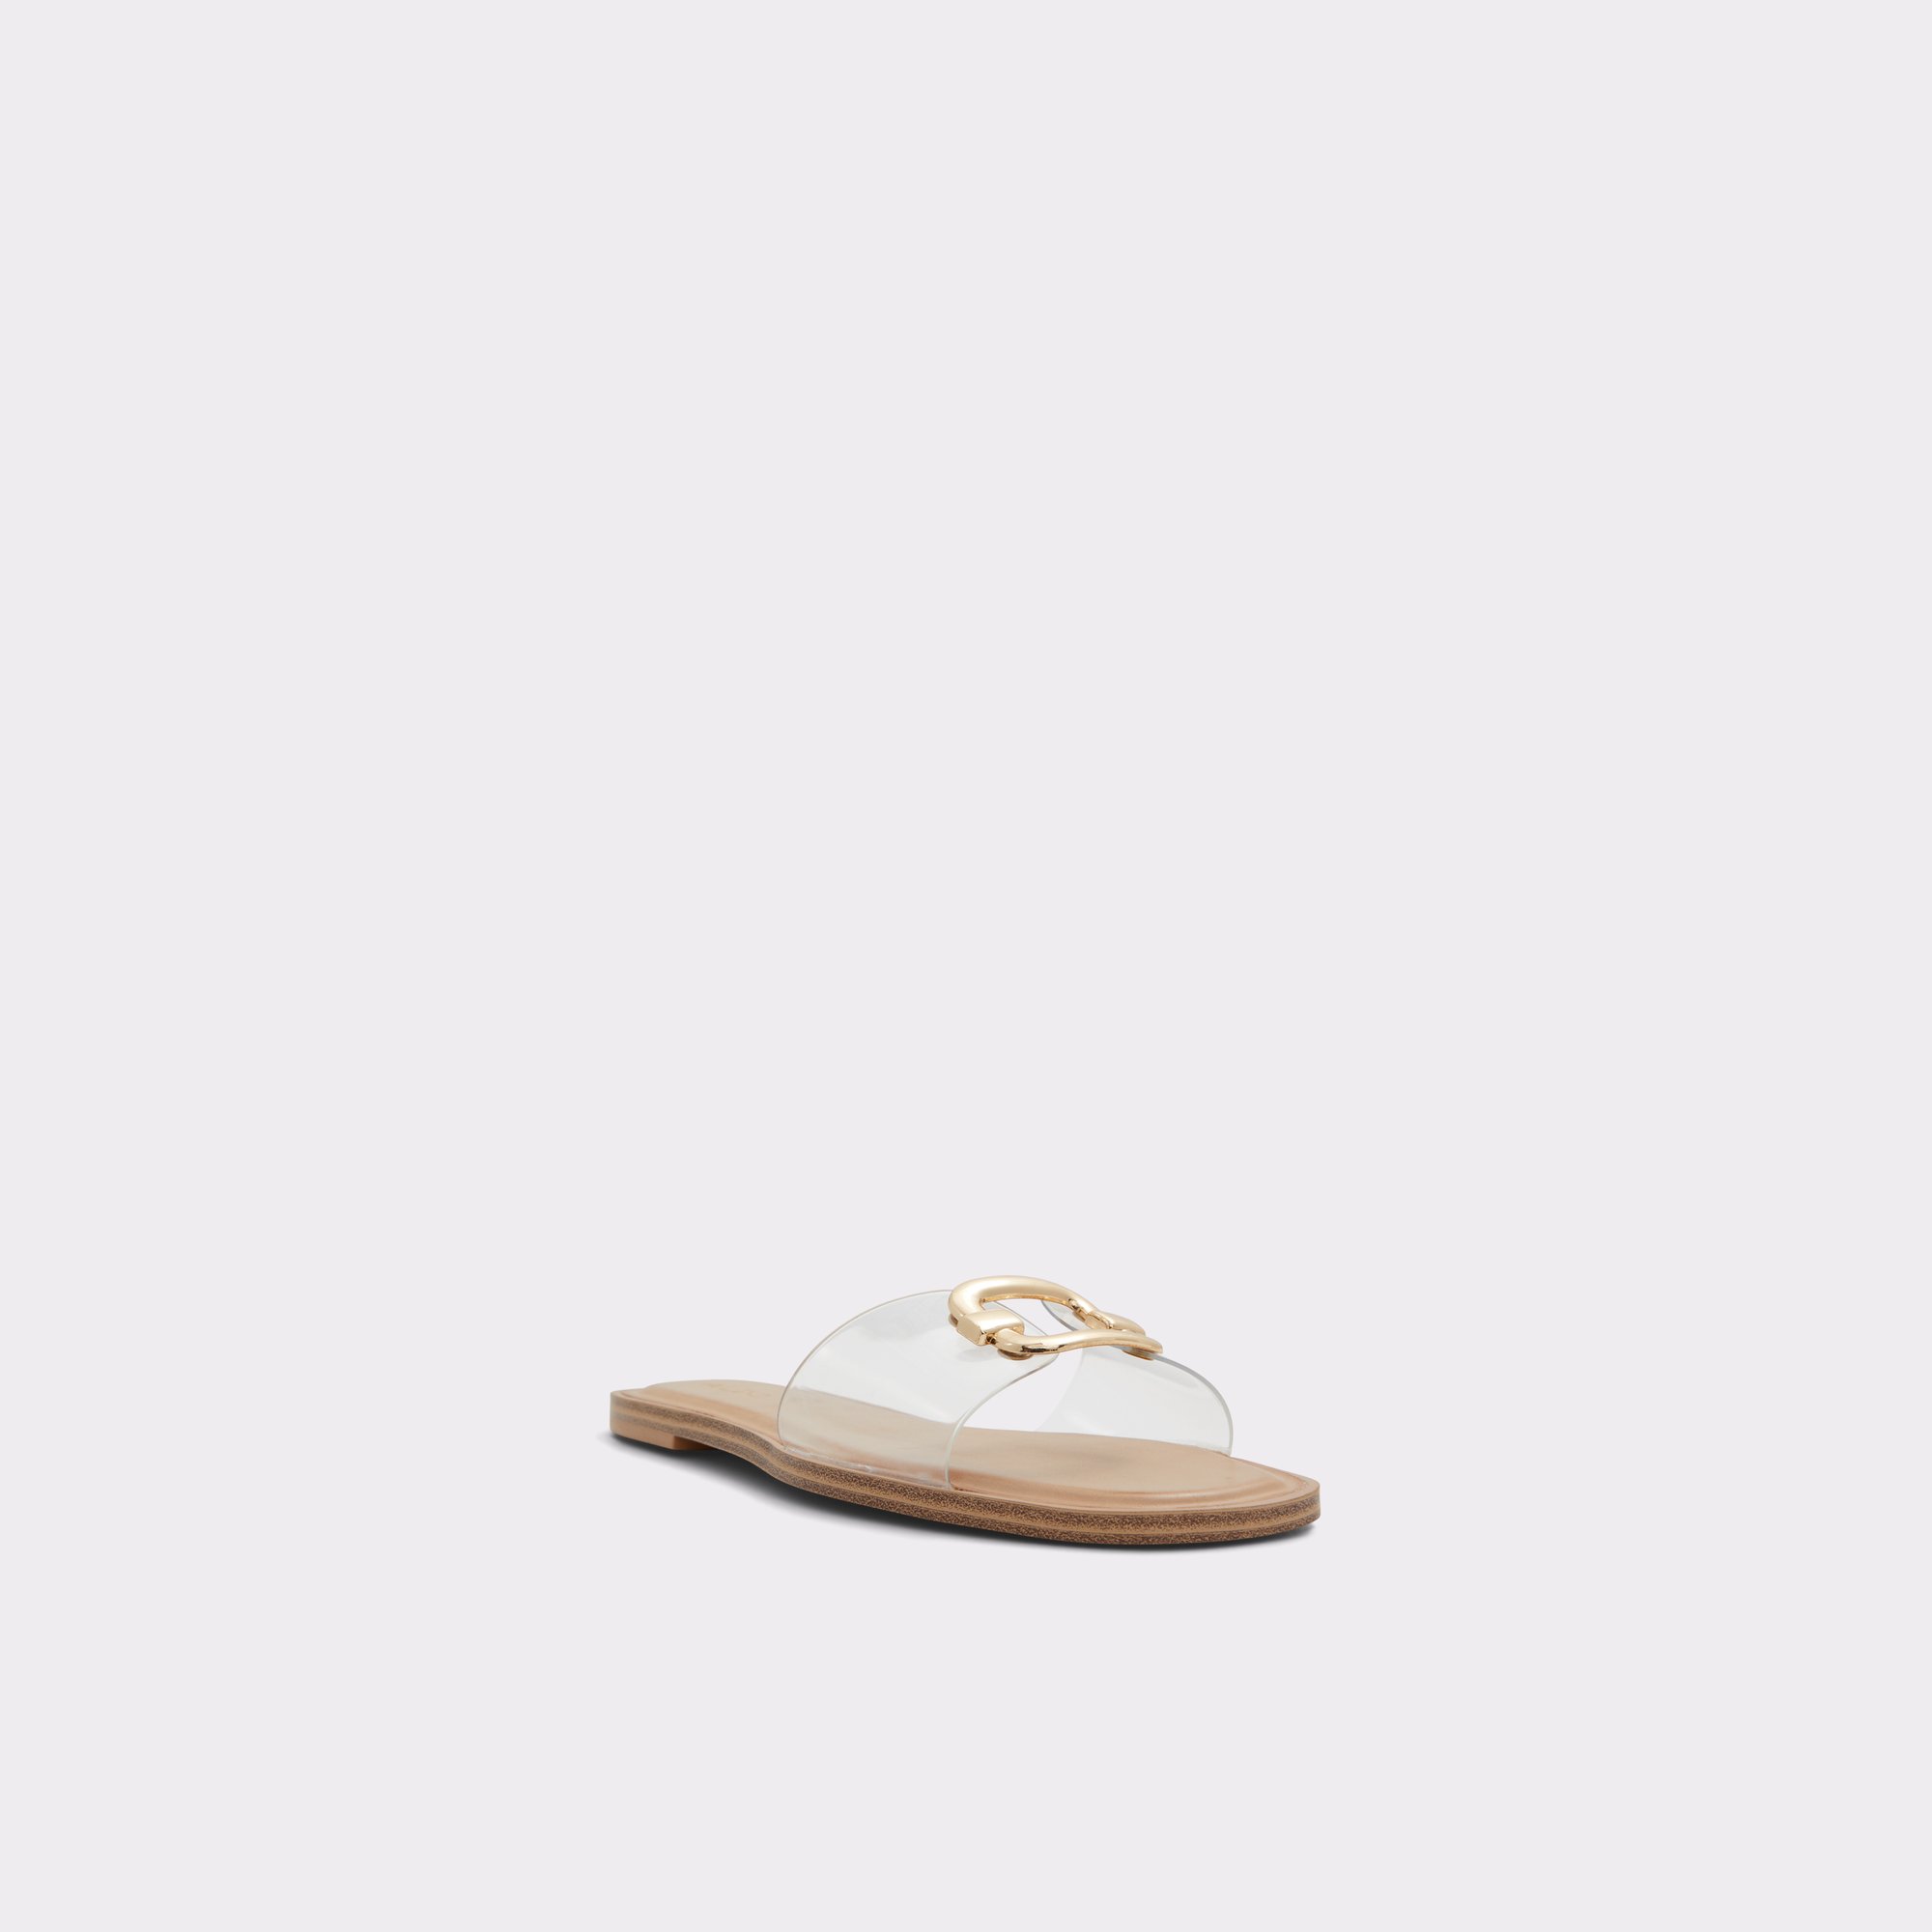 Glaeswen Clear Women's Flat Sandals | ALDO Canada